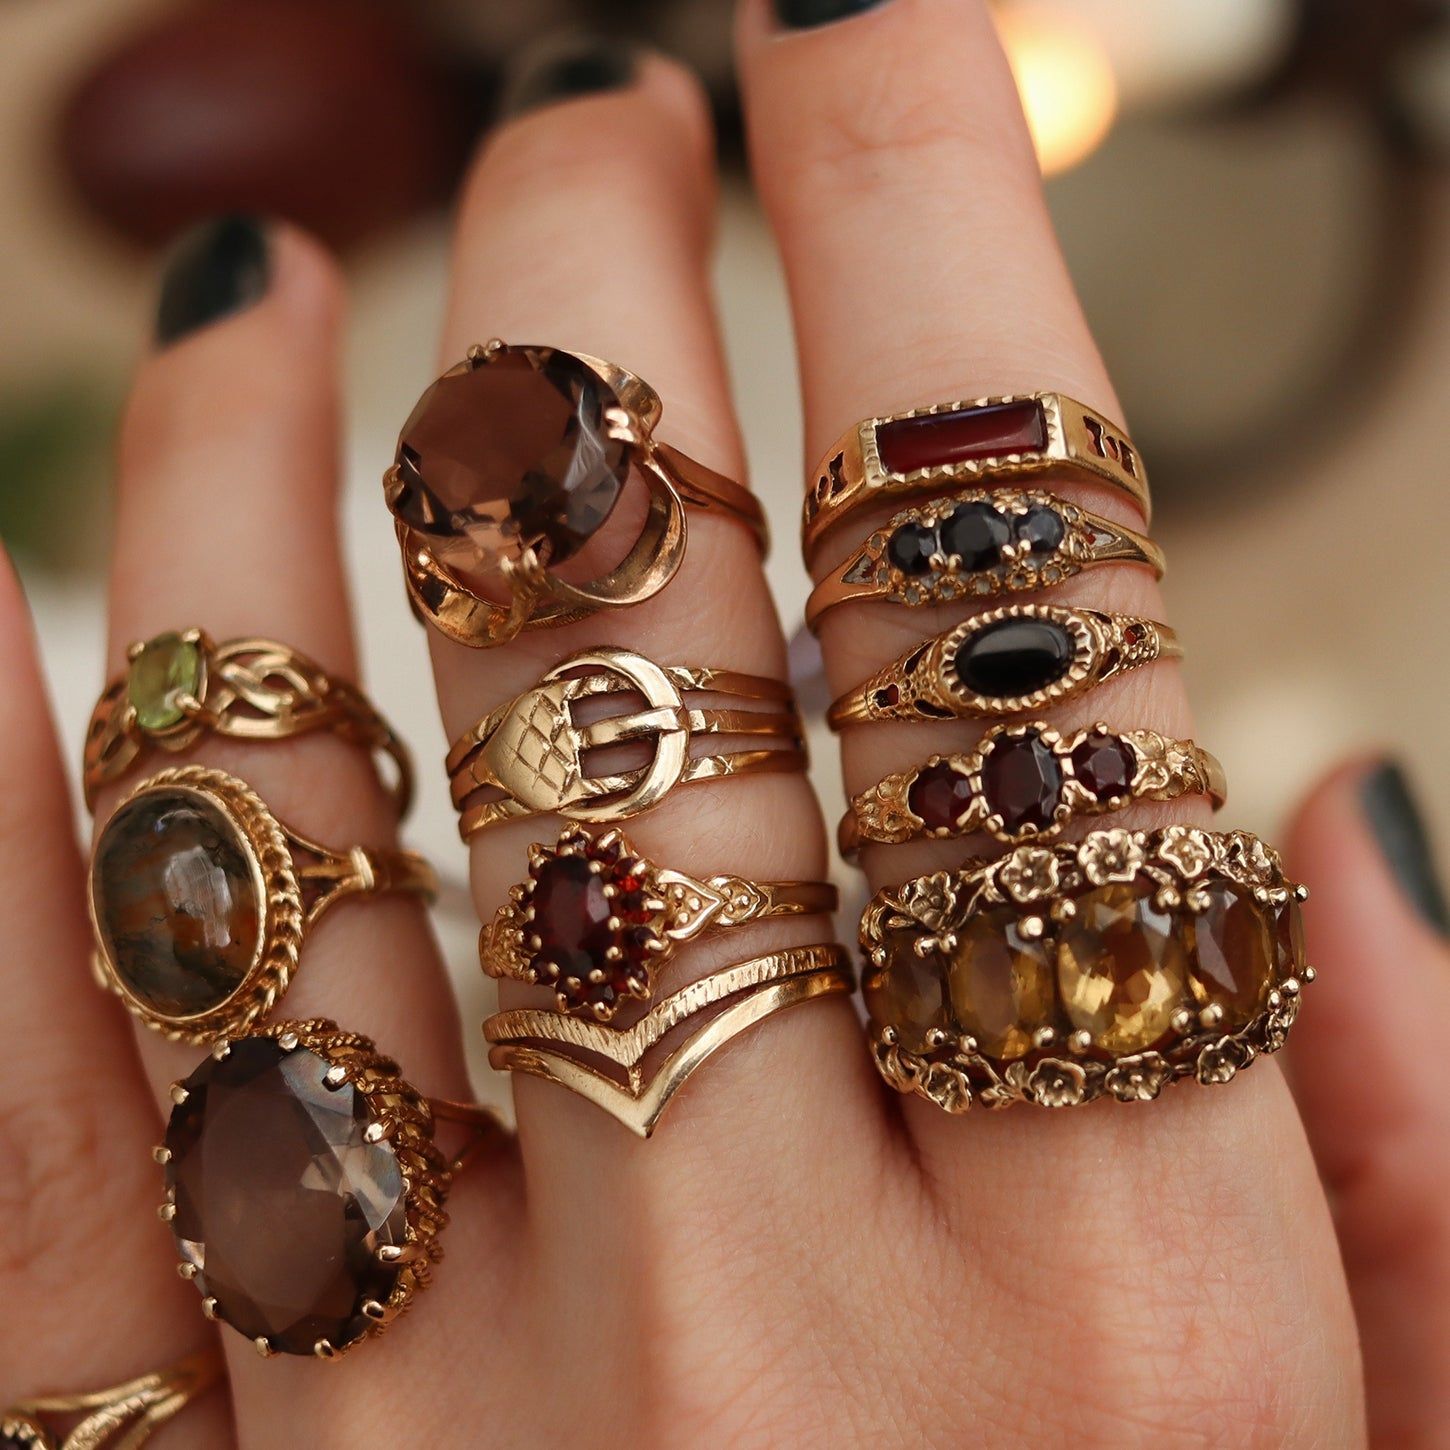 Stylish vintage rings looks incredible